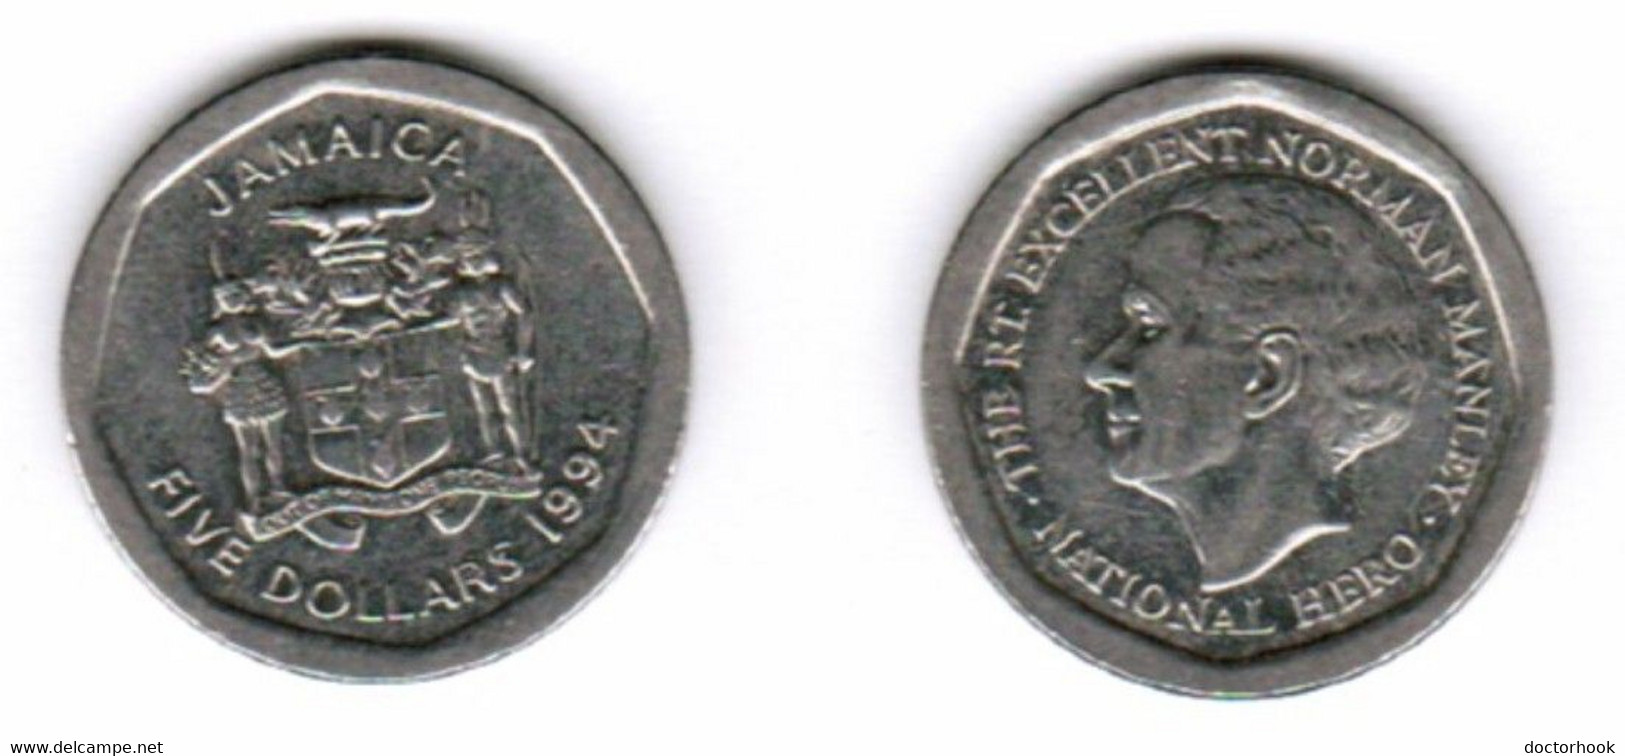 JAMAICA   $5.00 DOLLARS 1994 (KM # 163) #7026 - Jamaica